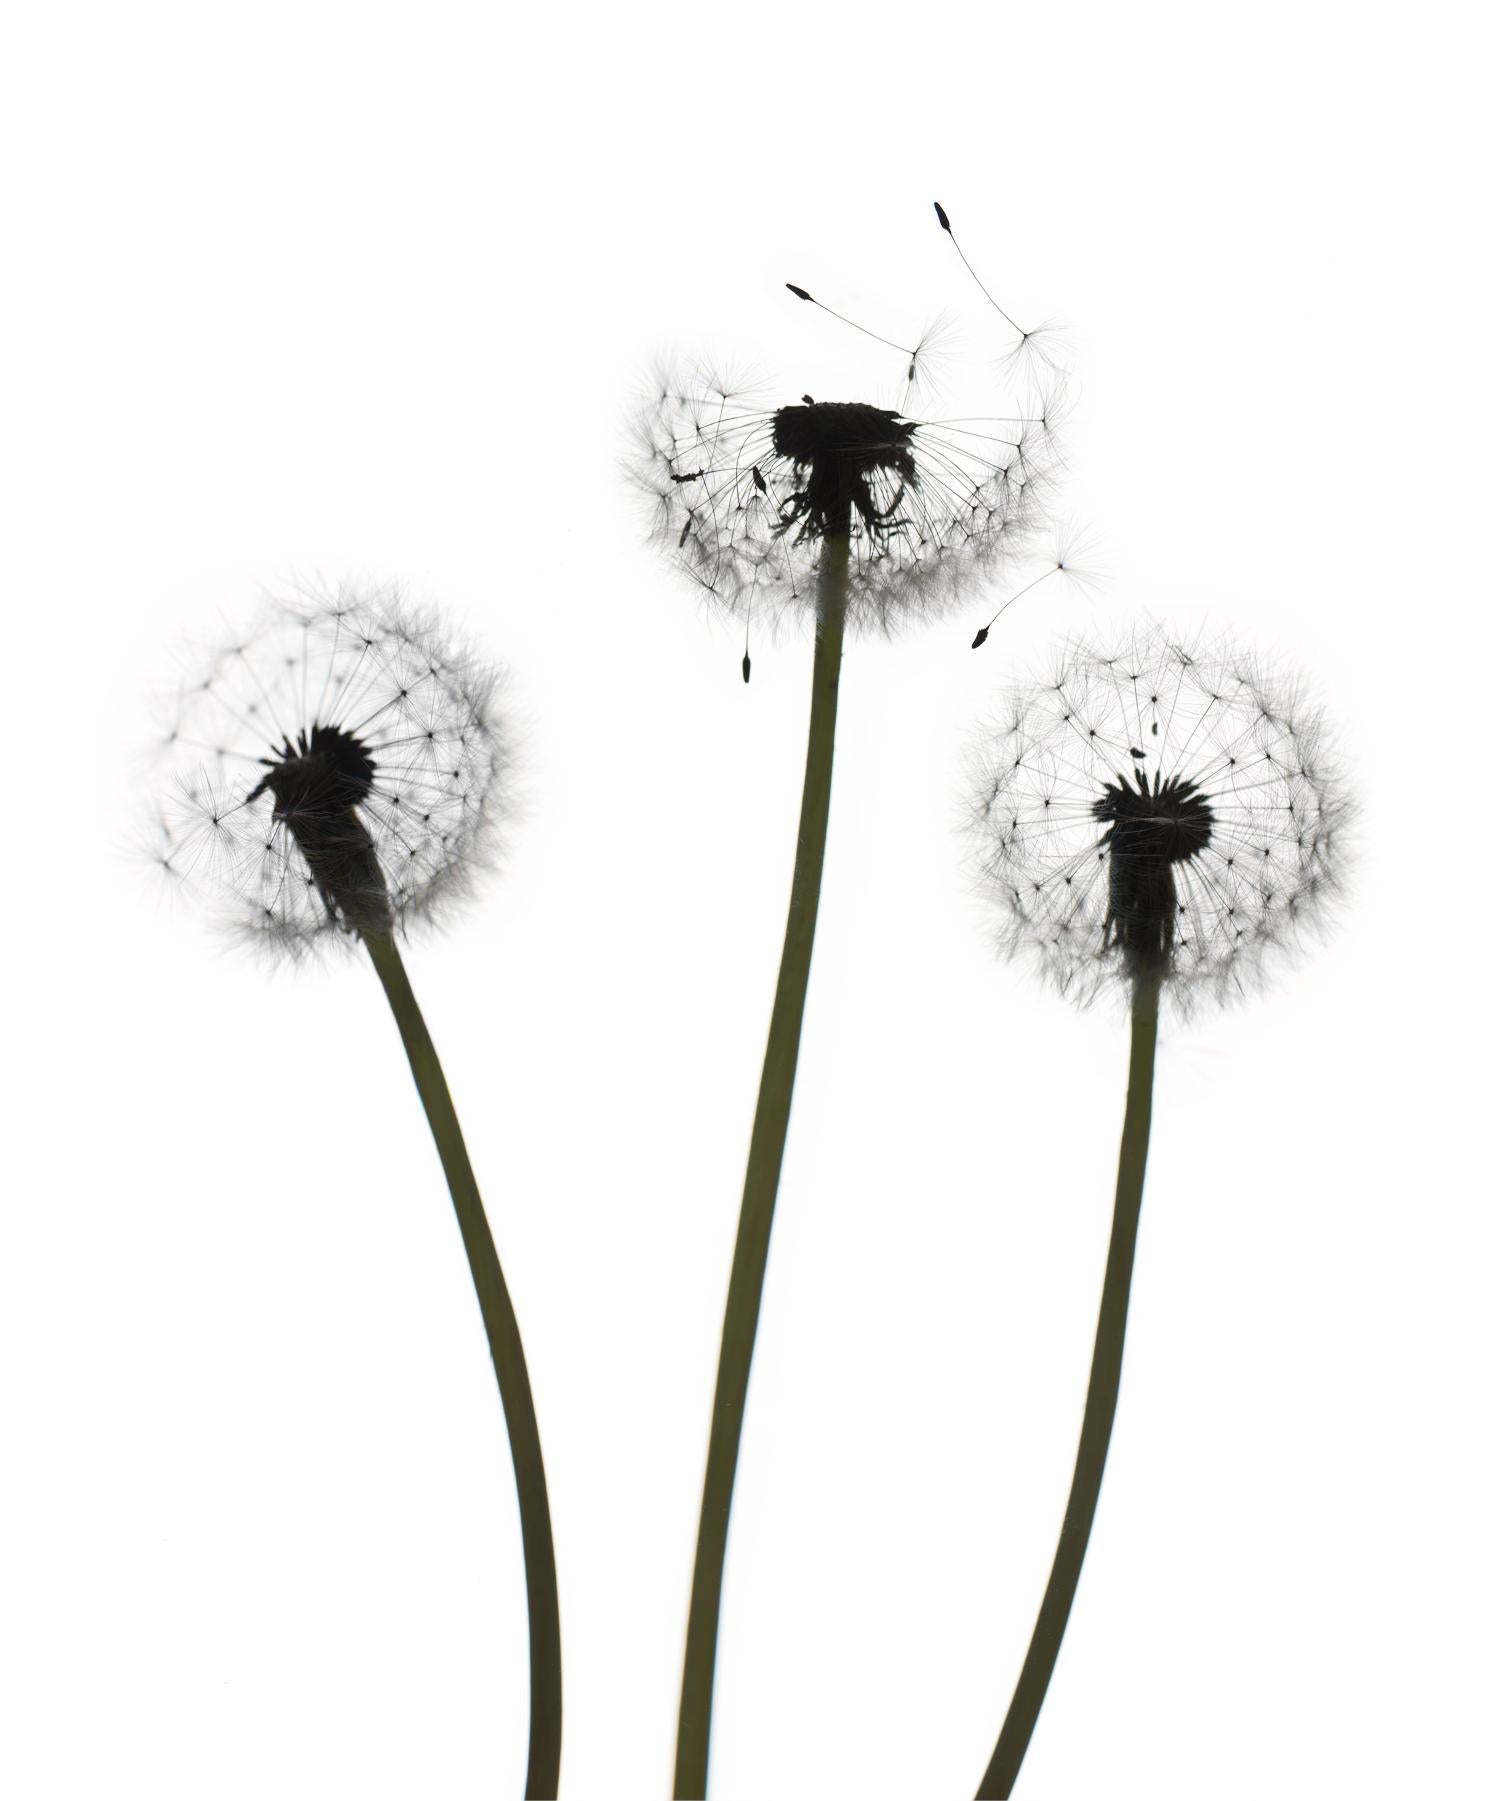 Untitled- Flower 147 (White): Still Life Photograph of Dandelions on White